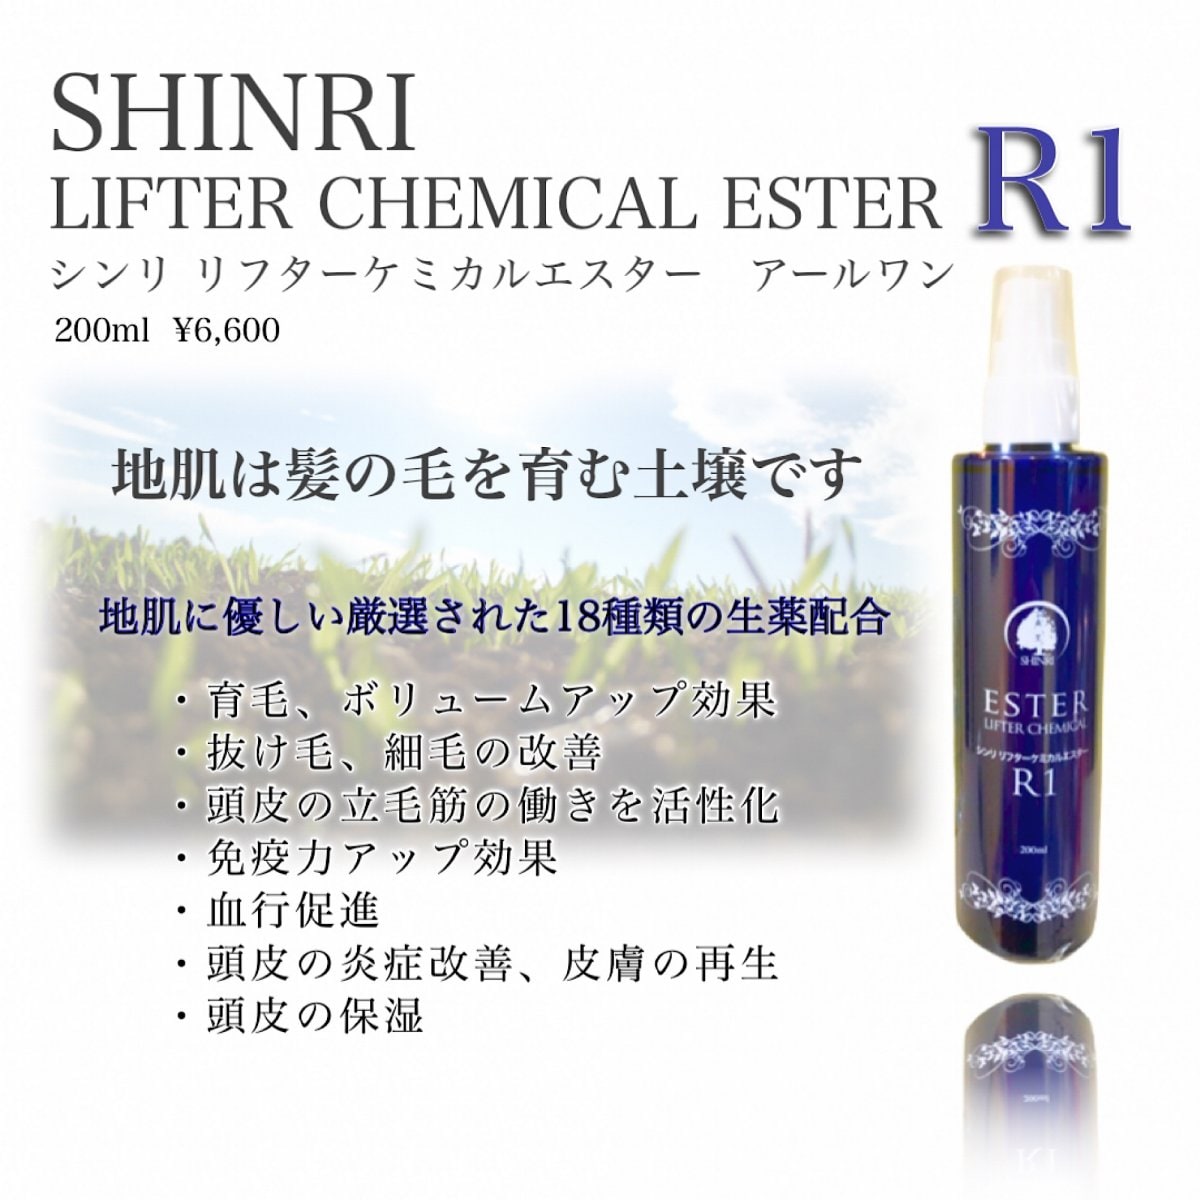 200ml【シンリ|育毛剤】SHINRI リフターケミカルエスター R1